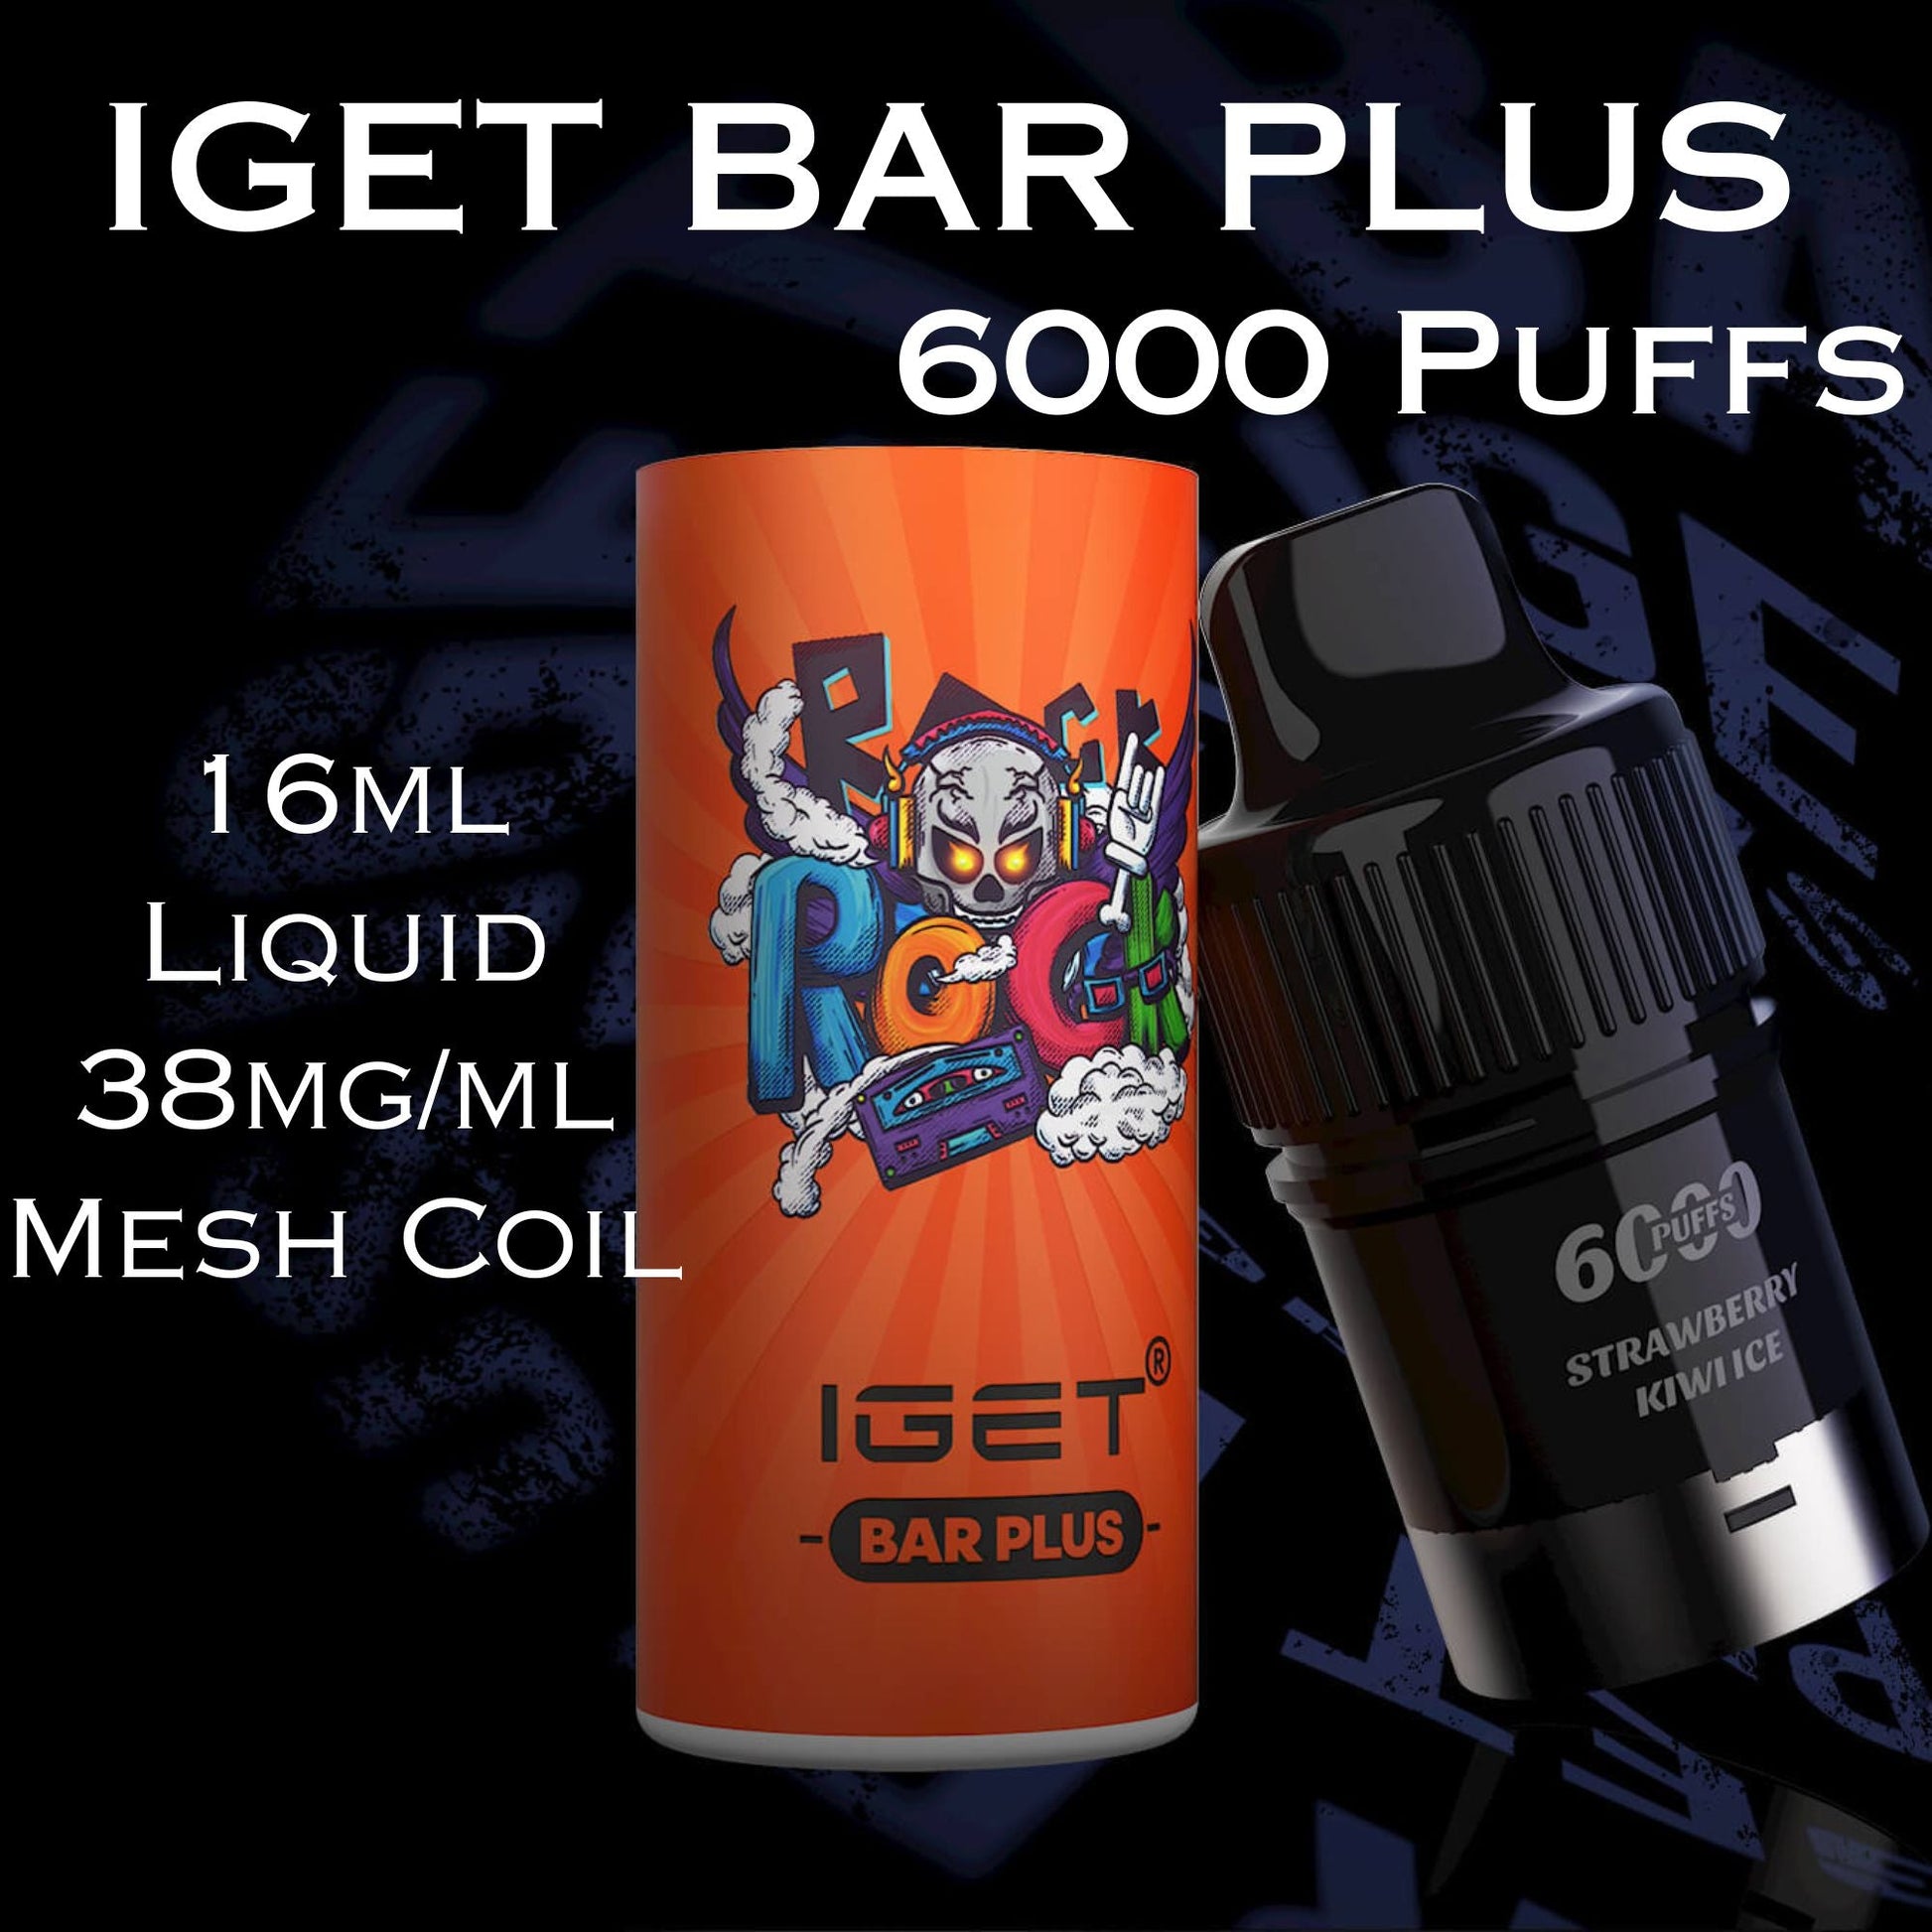 Iget Bar plus device - 6000 puffs vape device